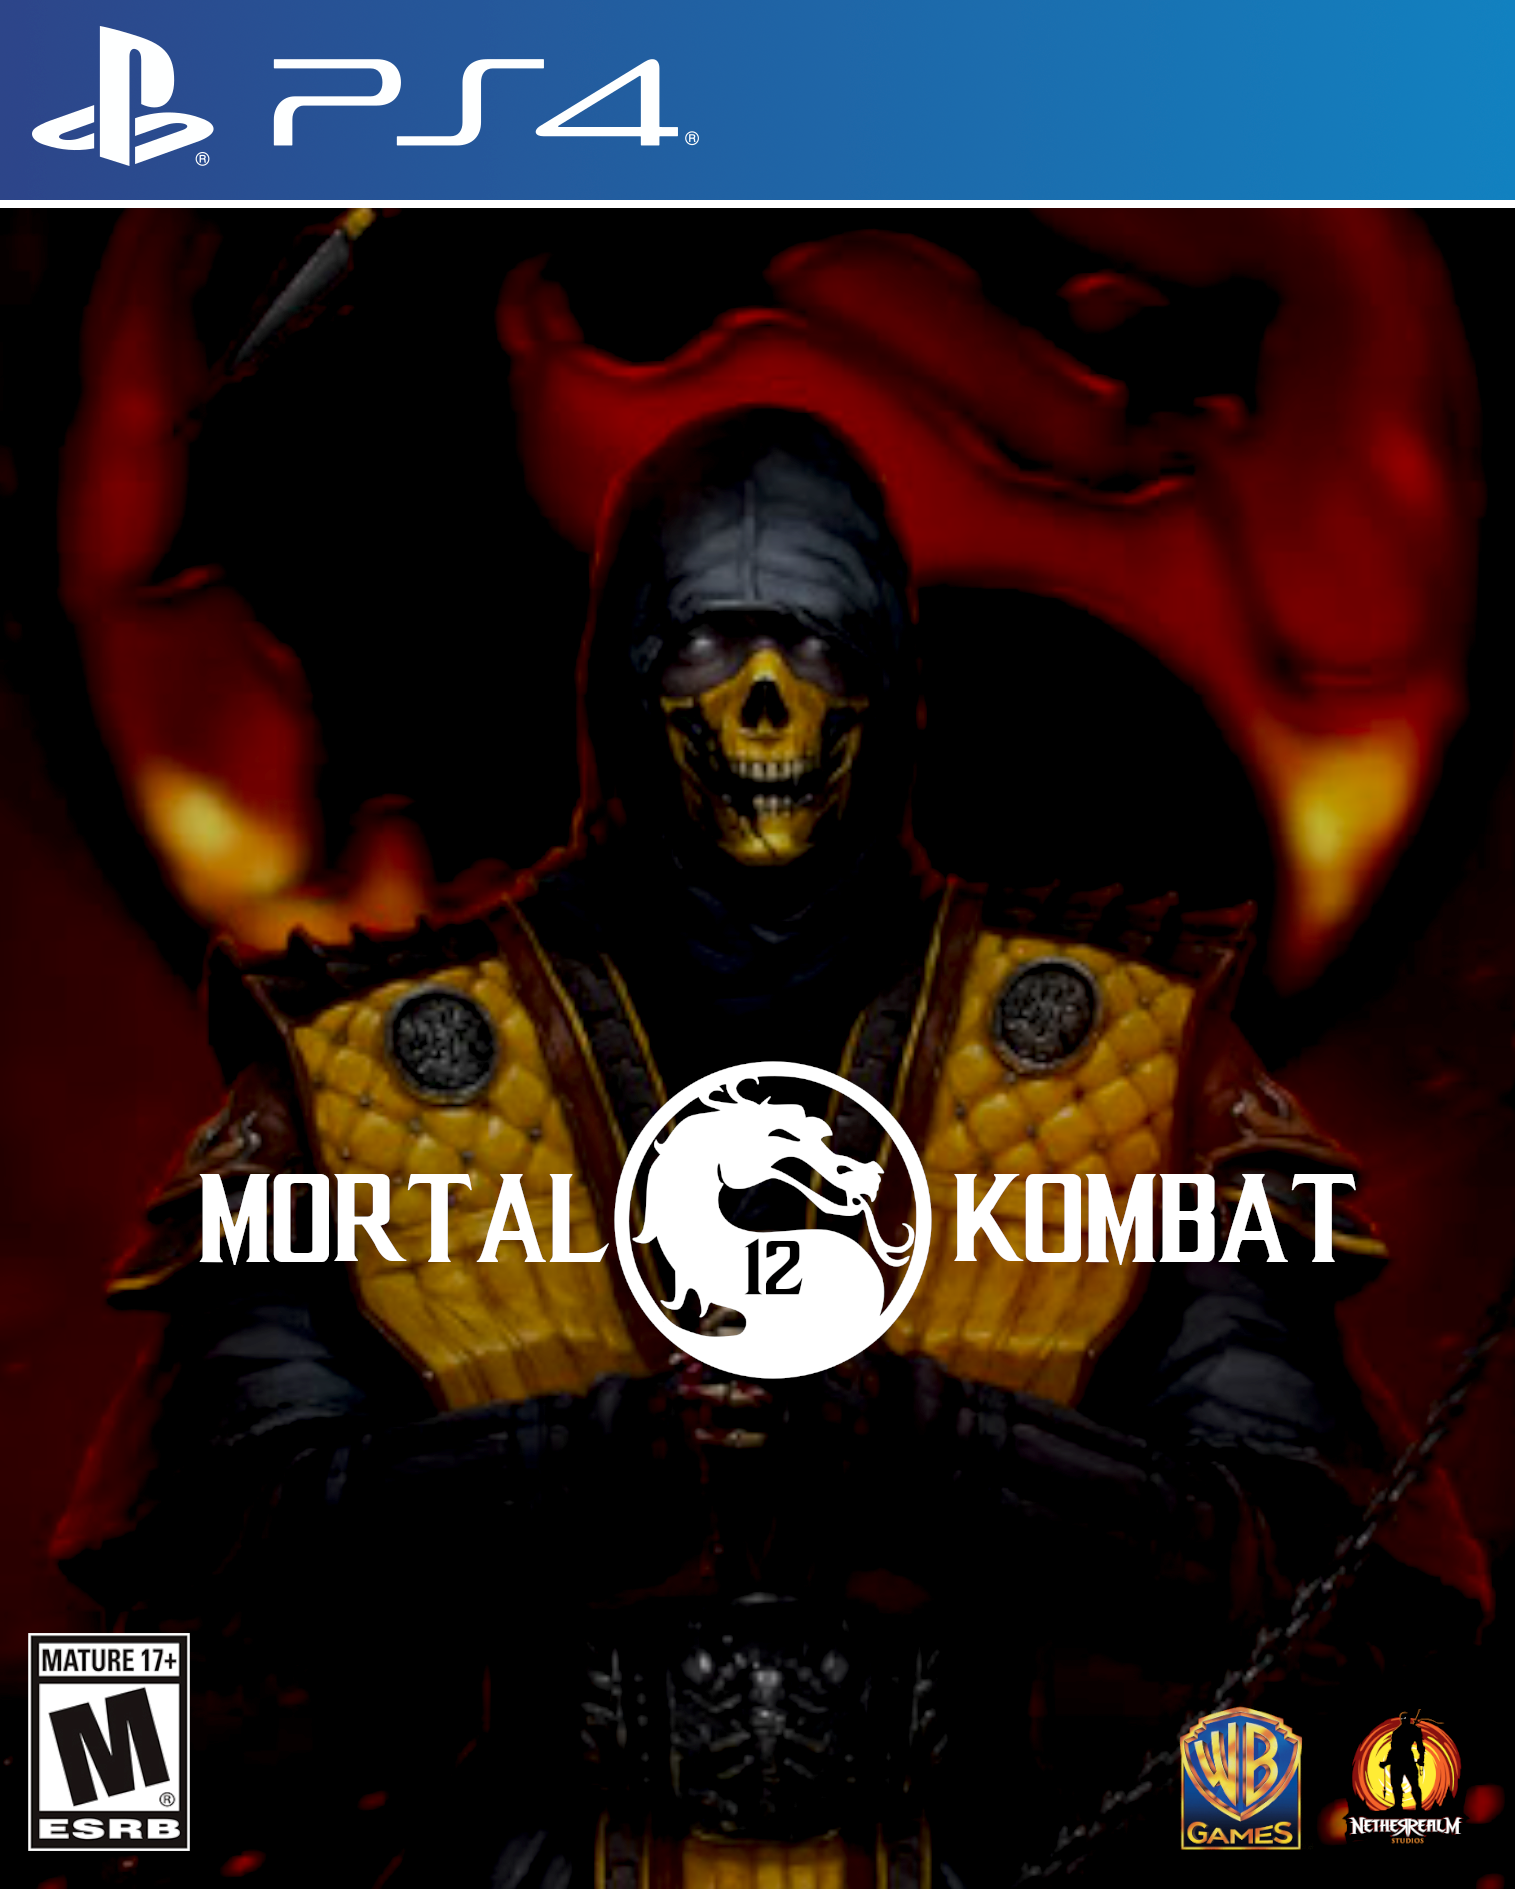 Tomorrow mk 12 potencial reveal trailer : r/MortalKombat